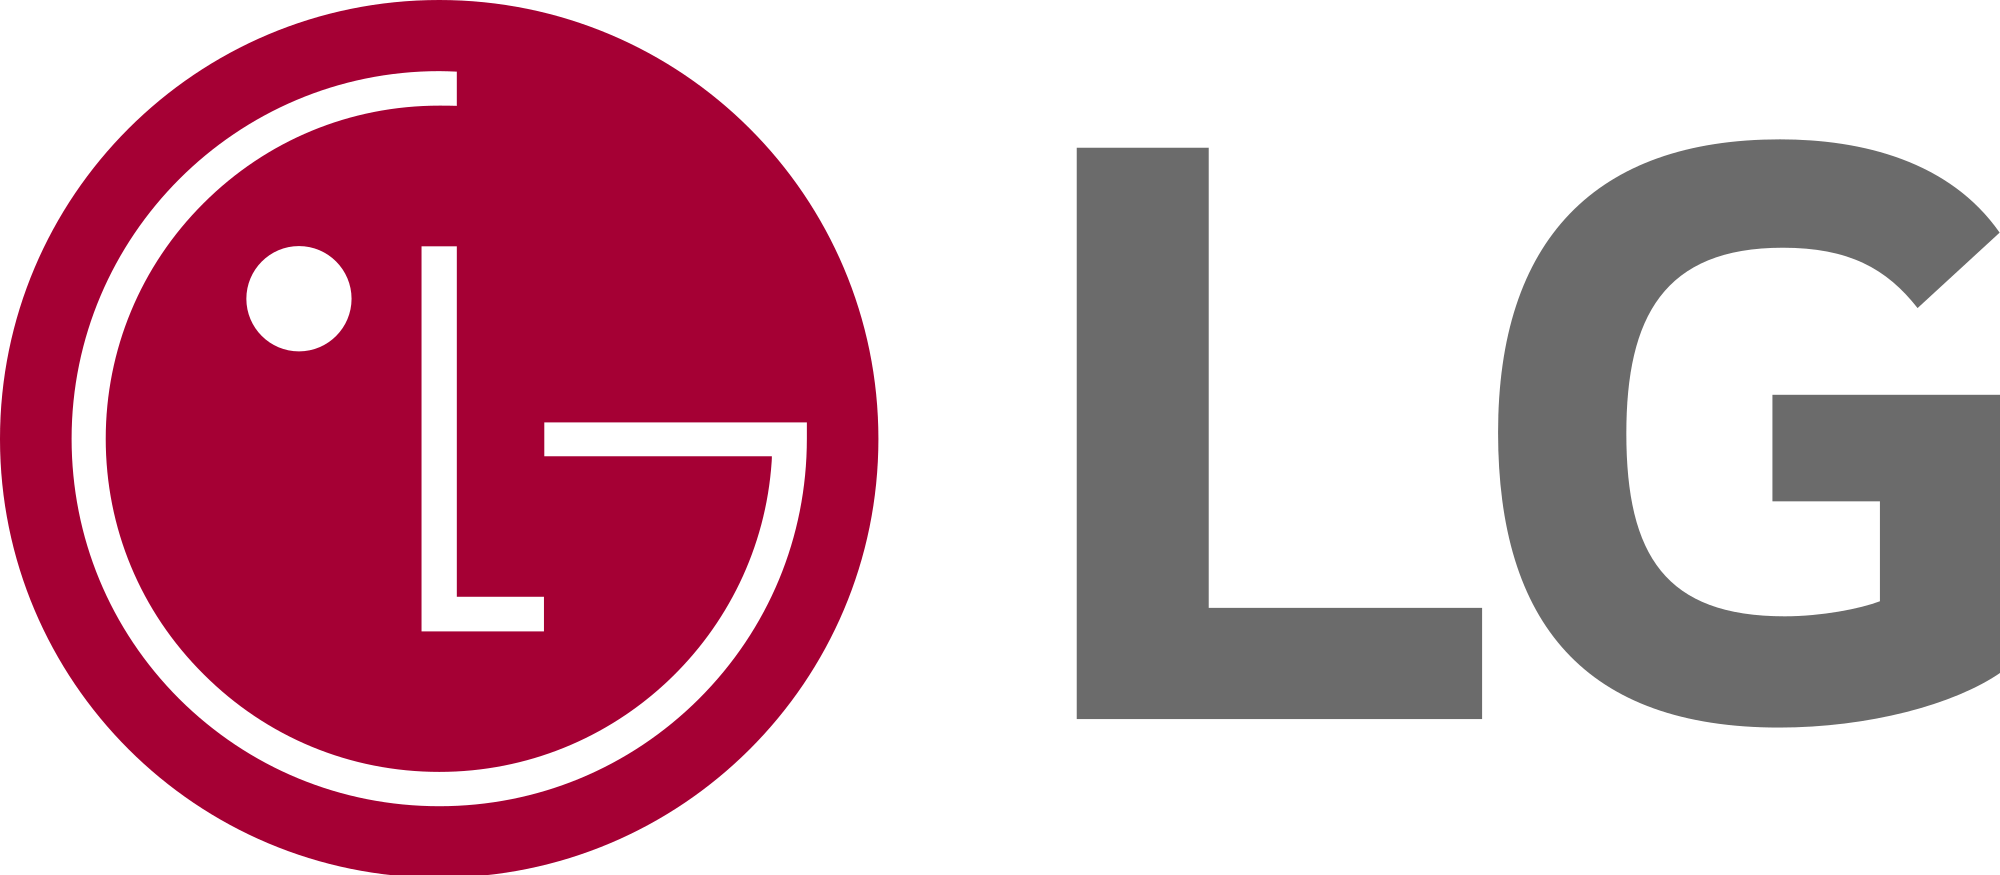 LG Logo - File:LG logo (2015).svg - Wikimedia Commons